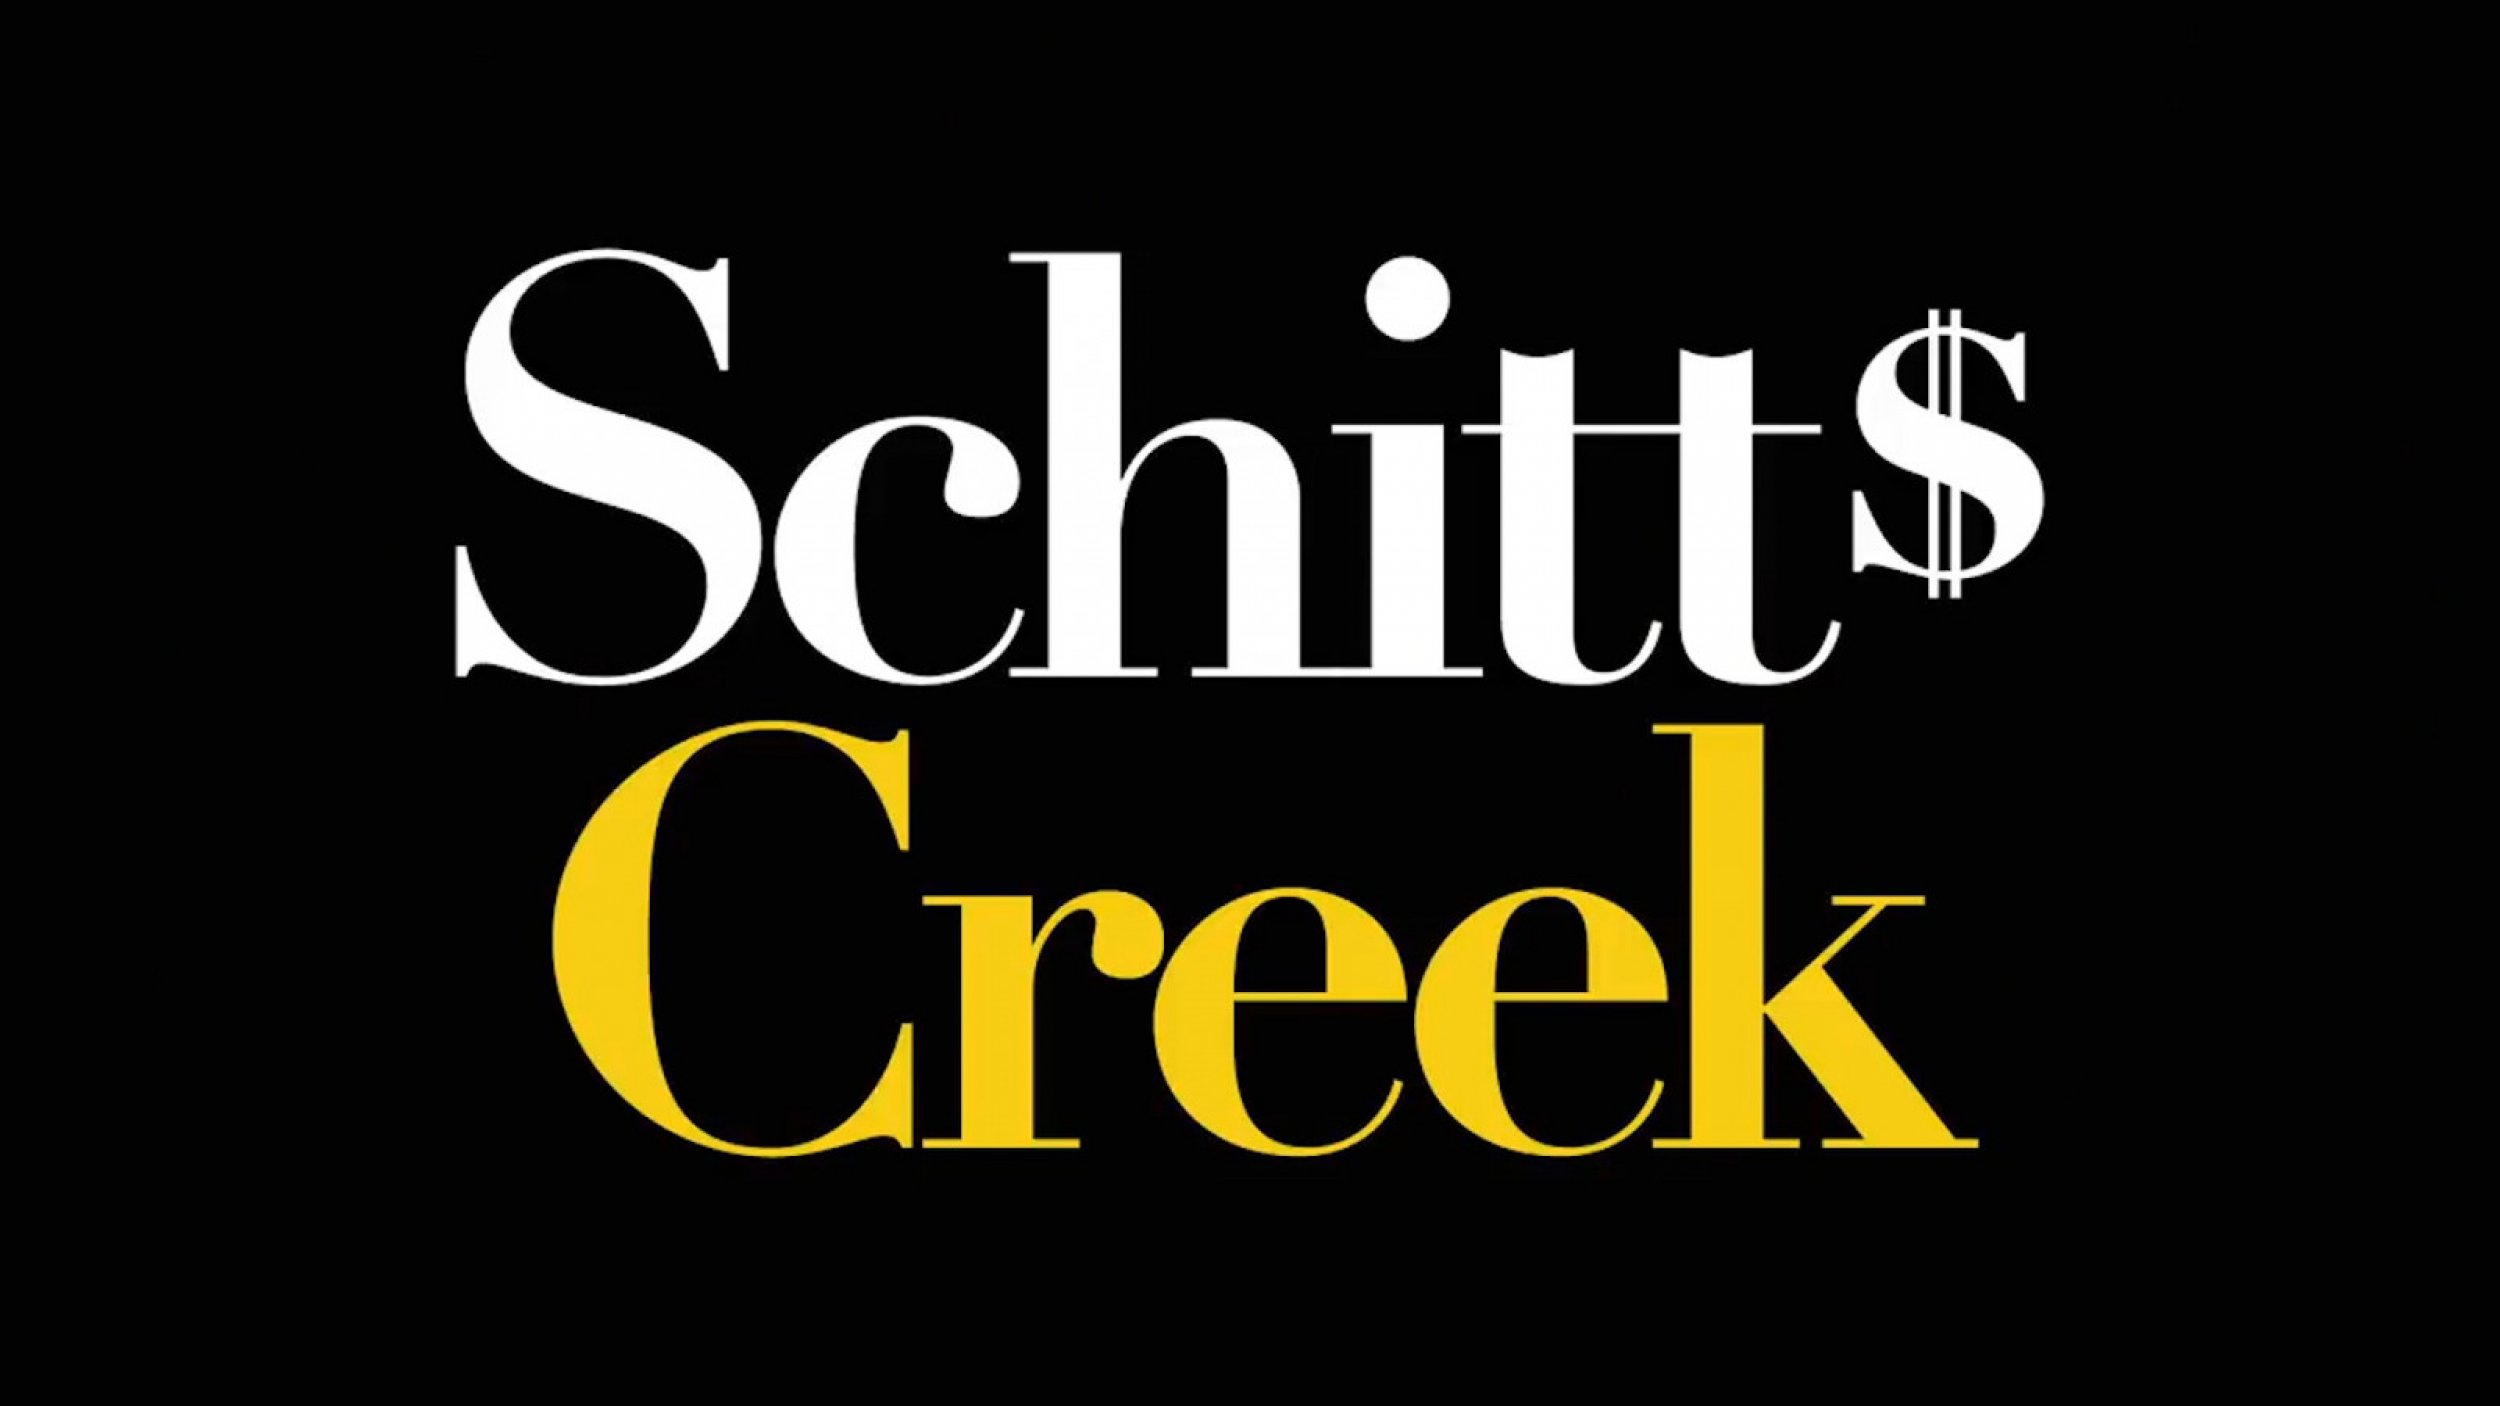 Schitts Creek - Season 5 Trailer